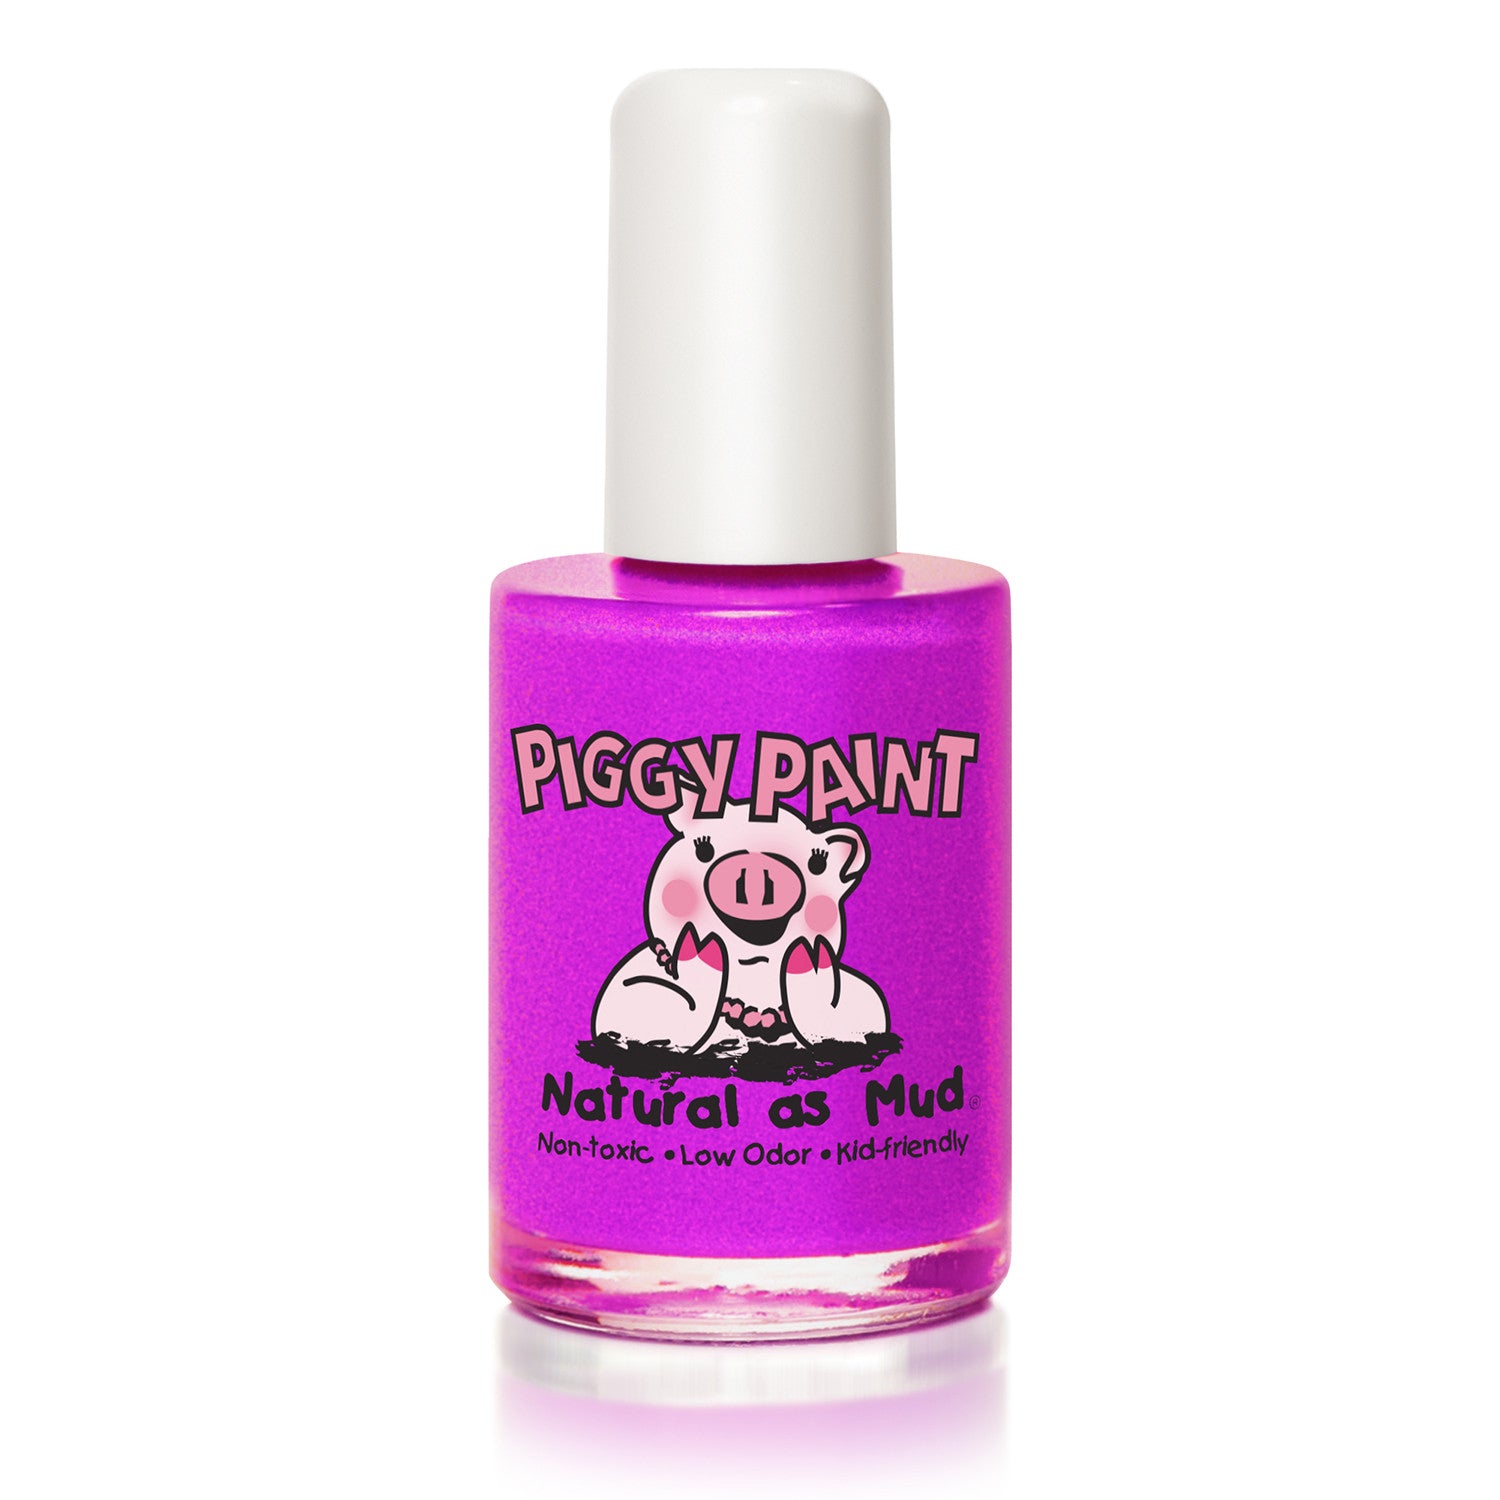 Piggy Paint Groovy Grape Natural Non-toxic Nail Polish